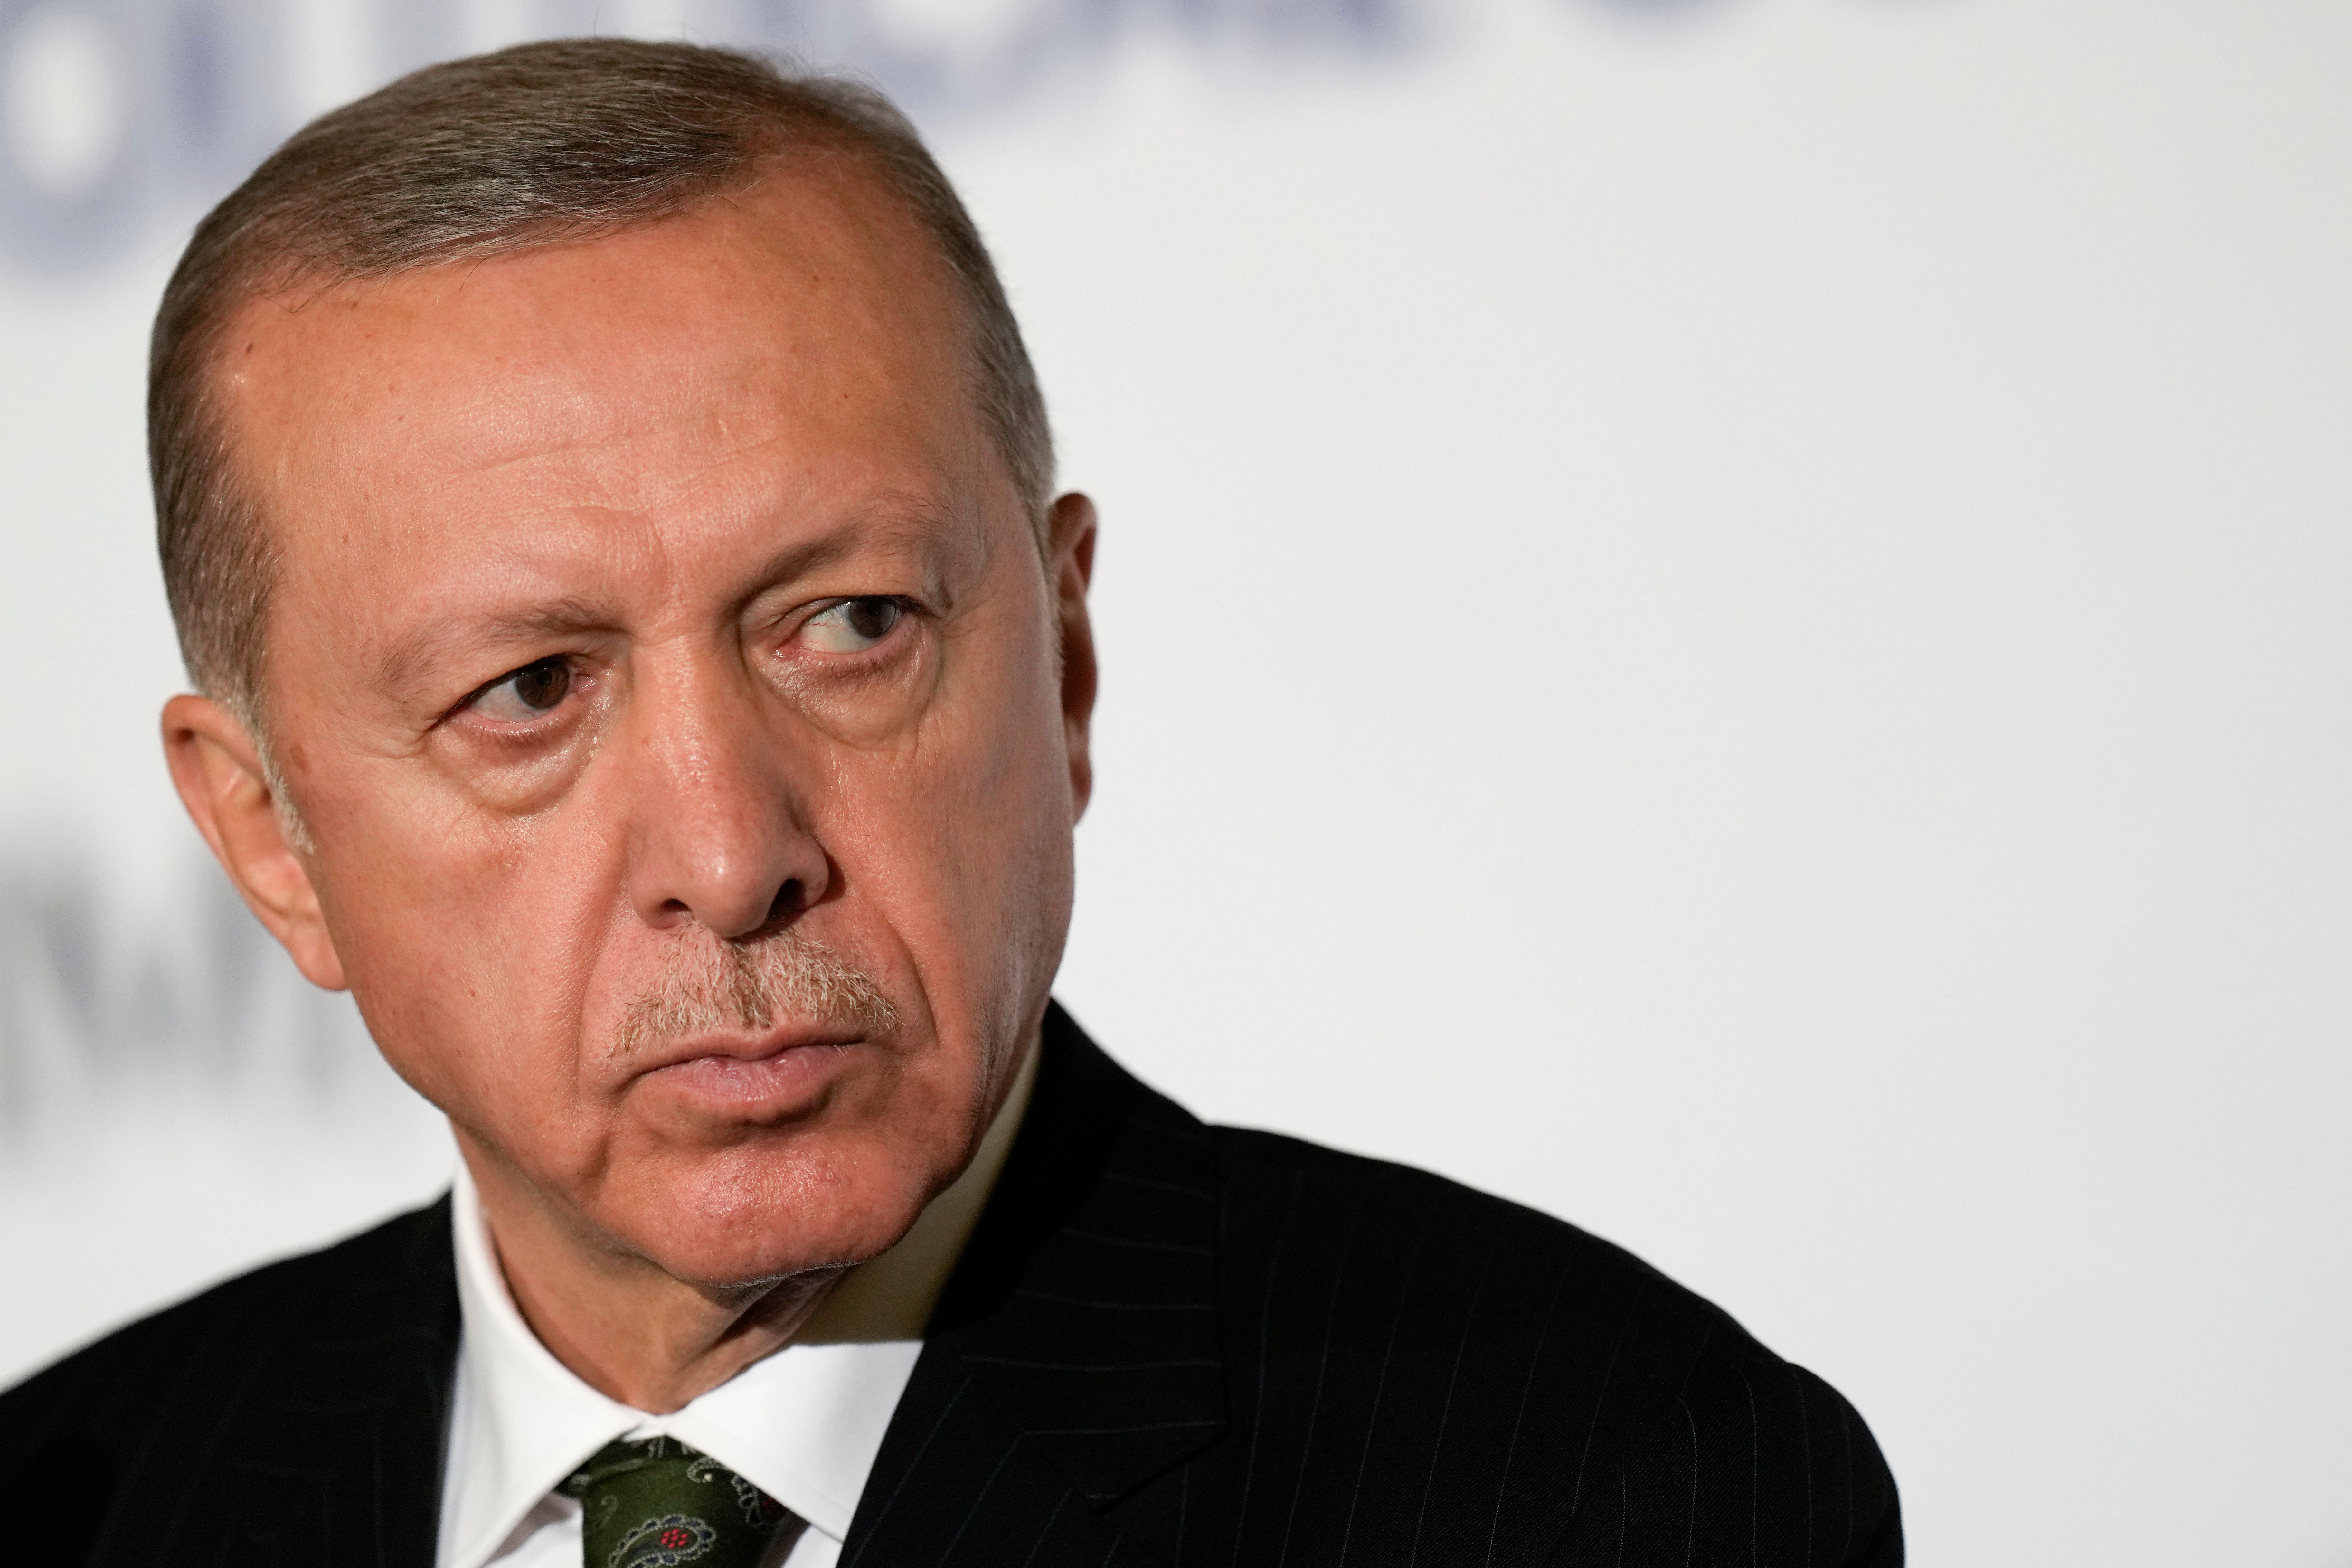 Turkish president Tayyip Erdogan